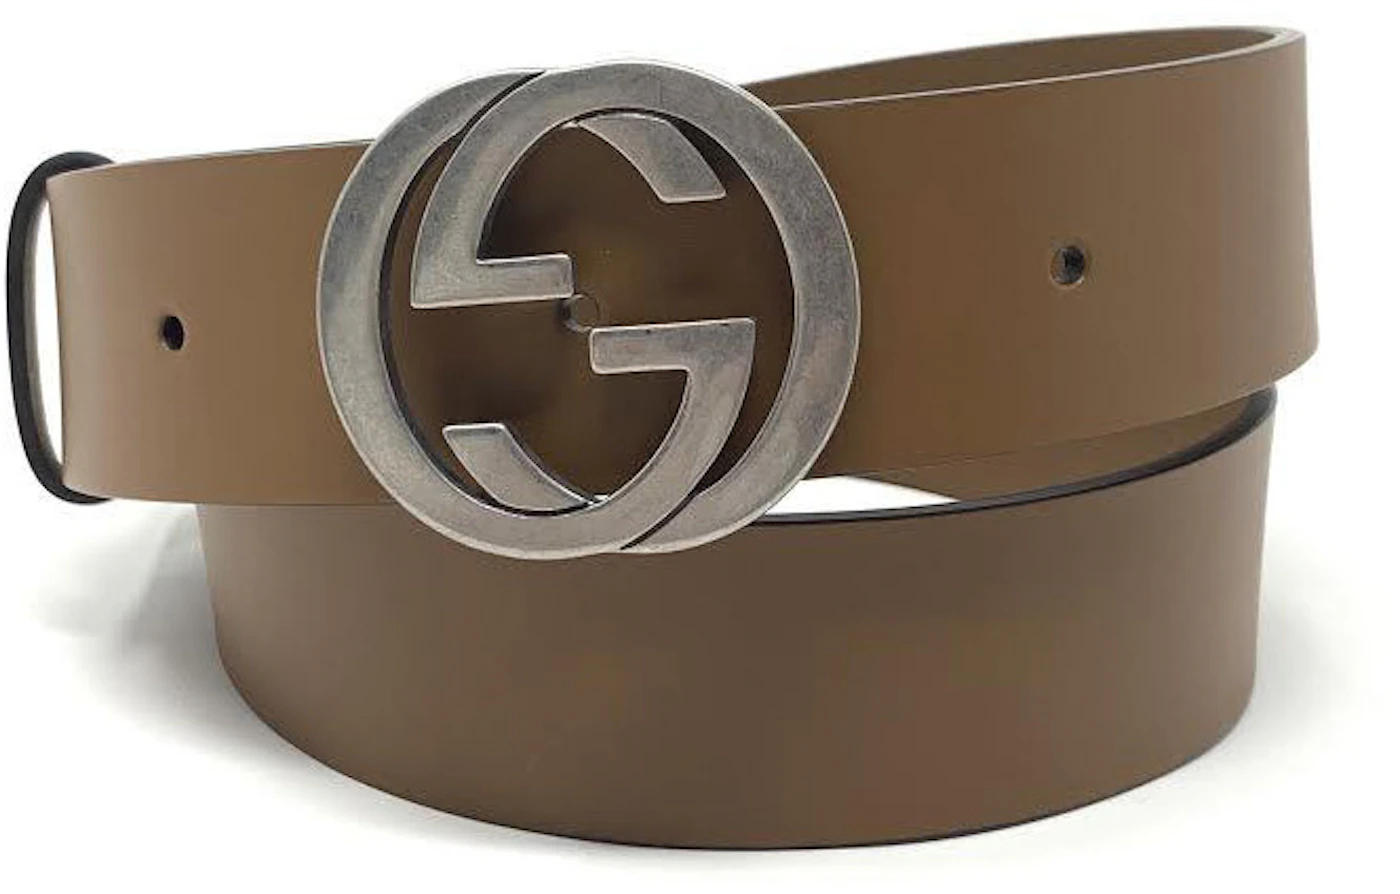 GG Signature belt leather Phoenix Mall leather